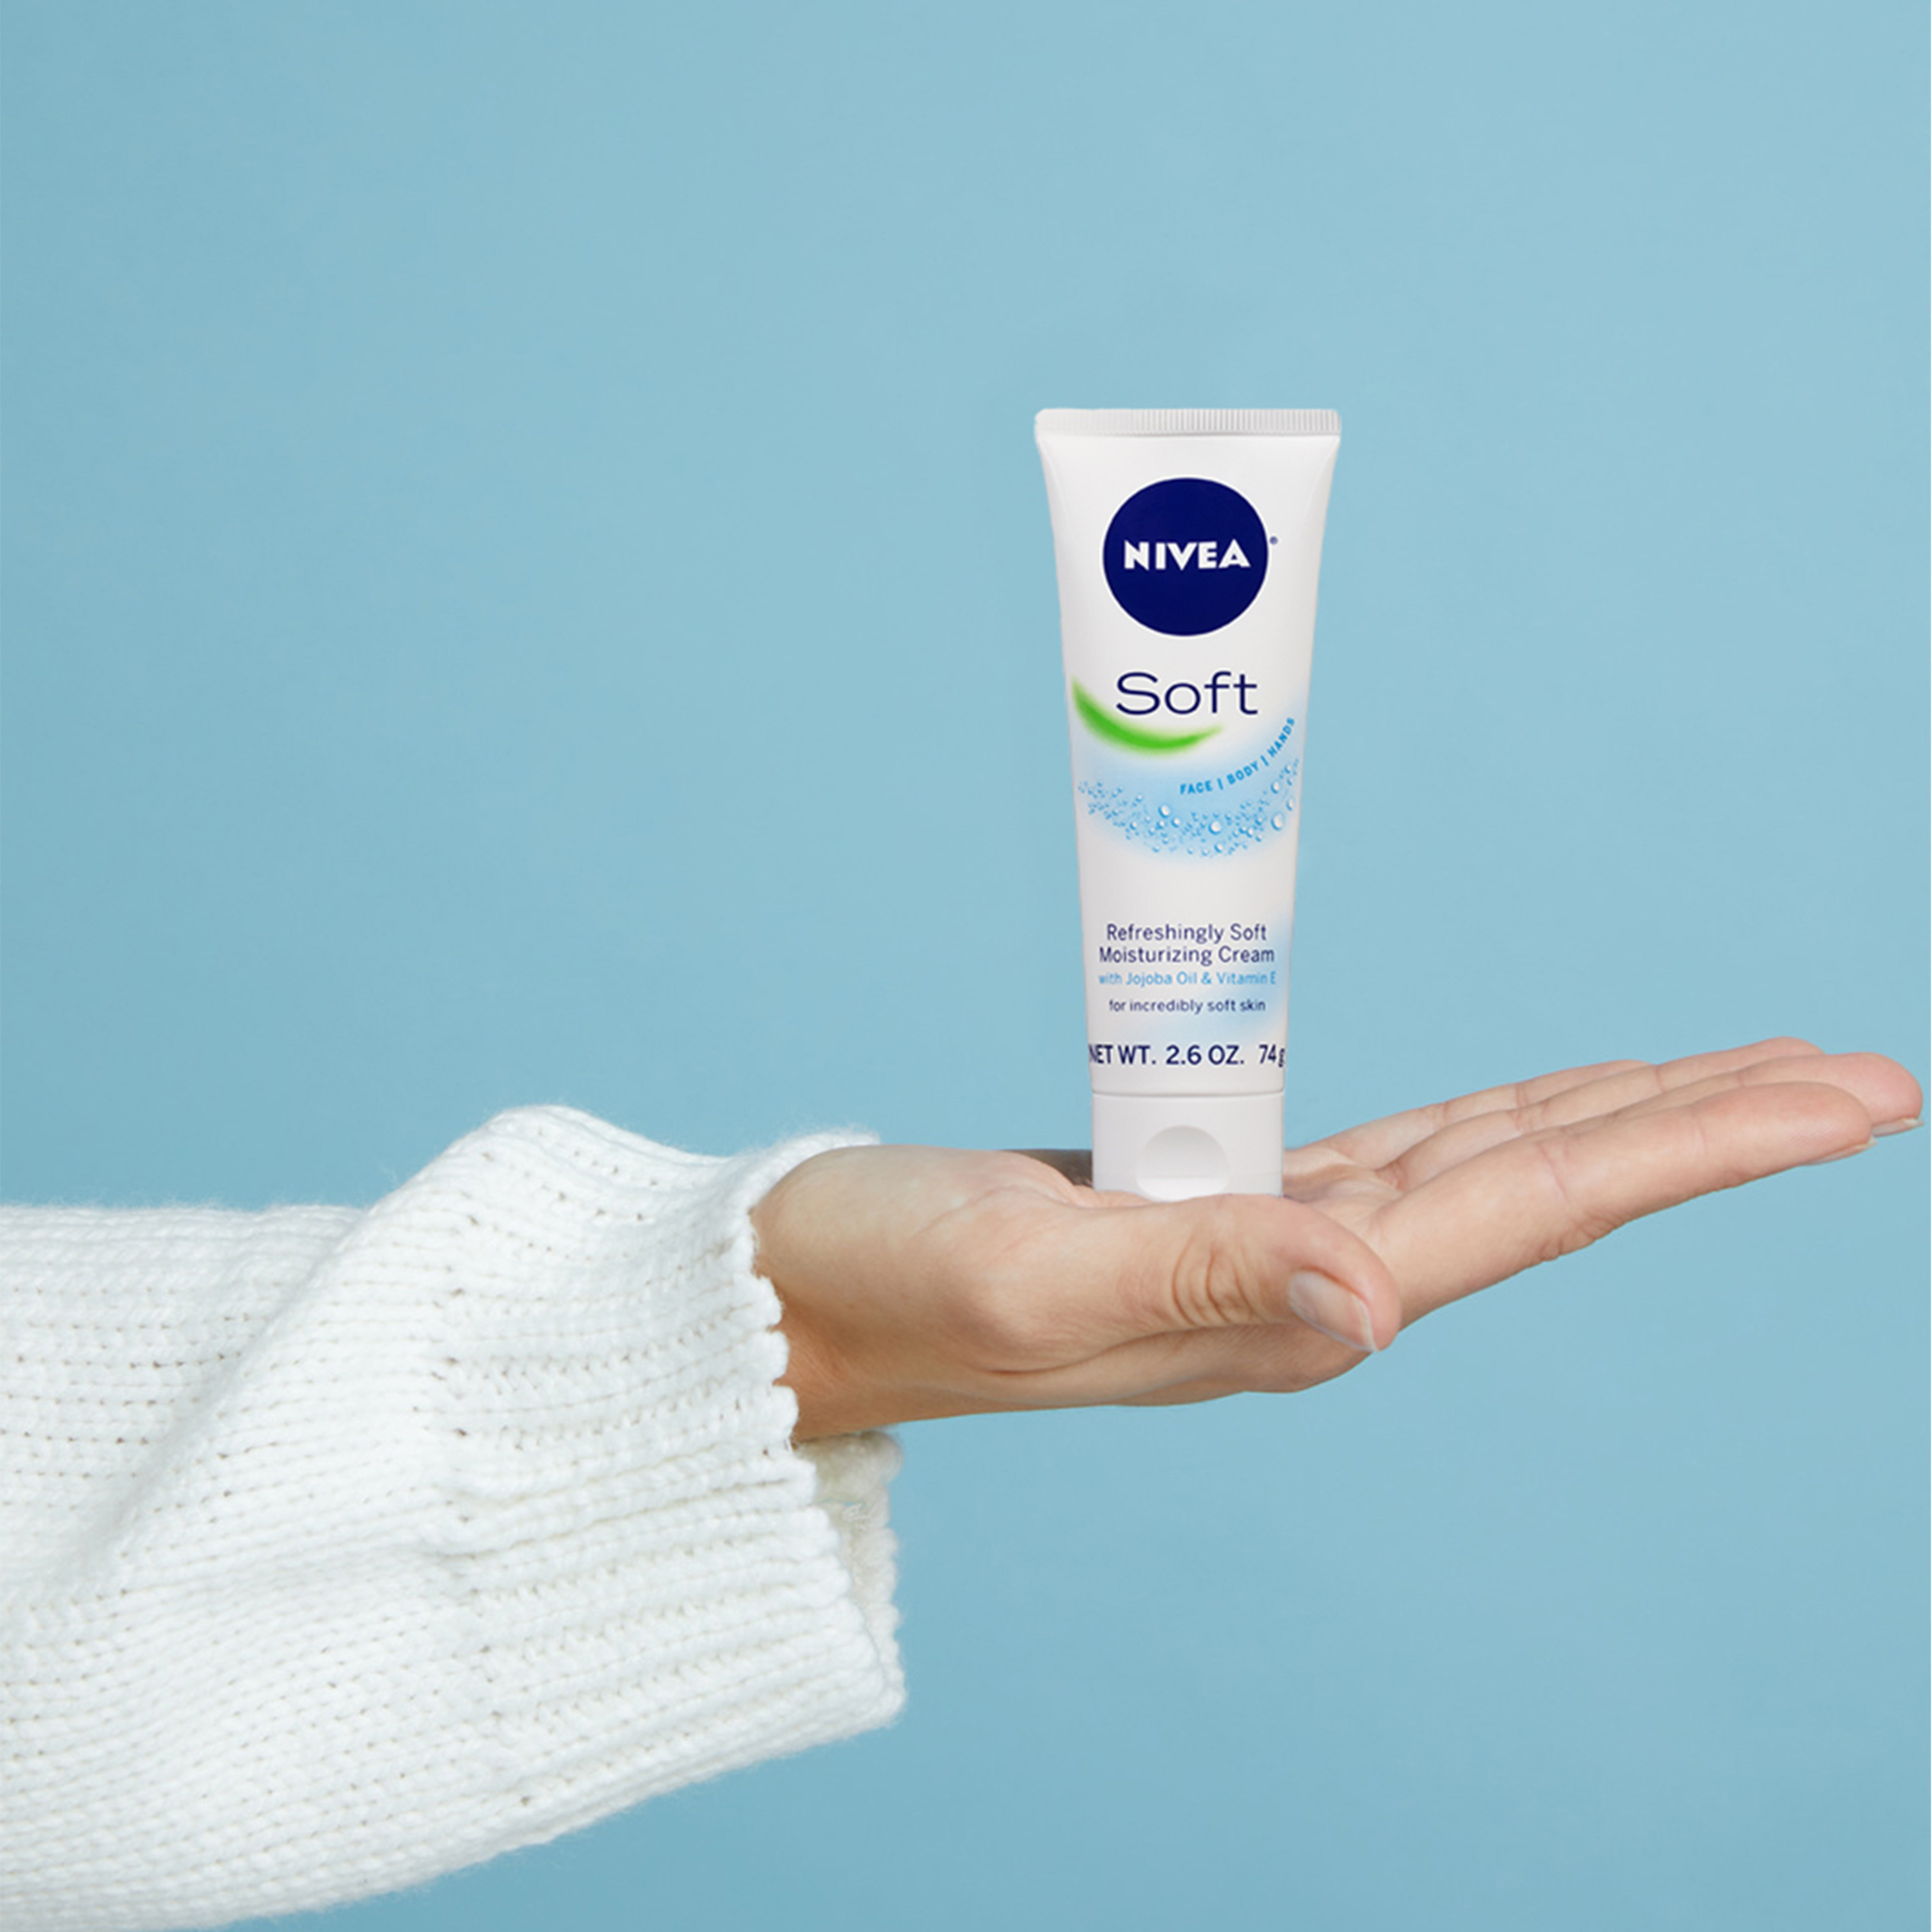 NIVEA Soft Cream, Refreshingly Soft Moisturizing Cream, Body Cream, Face Cream, and Hand Cream, 2.6 Oz Tube - image 3 of 10